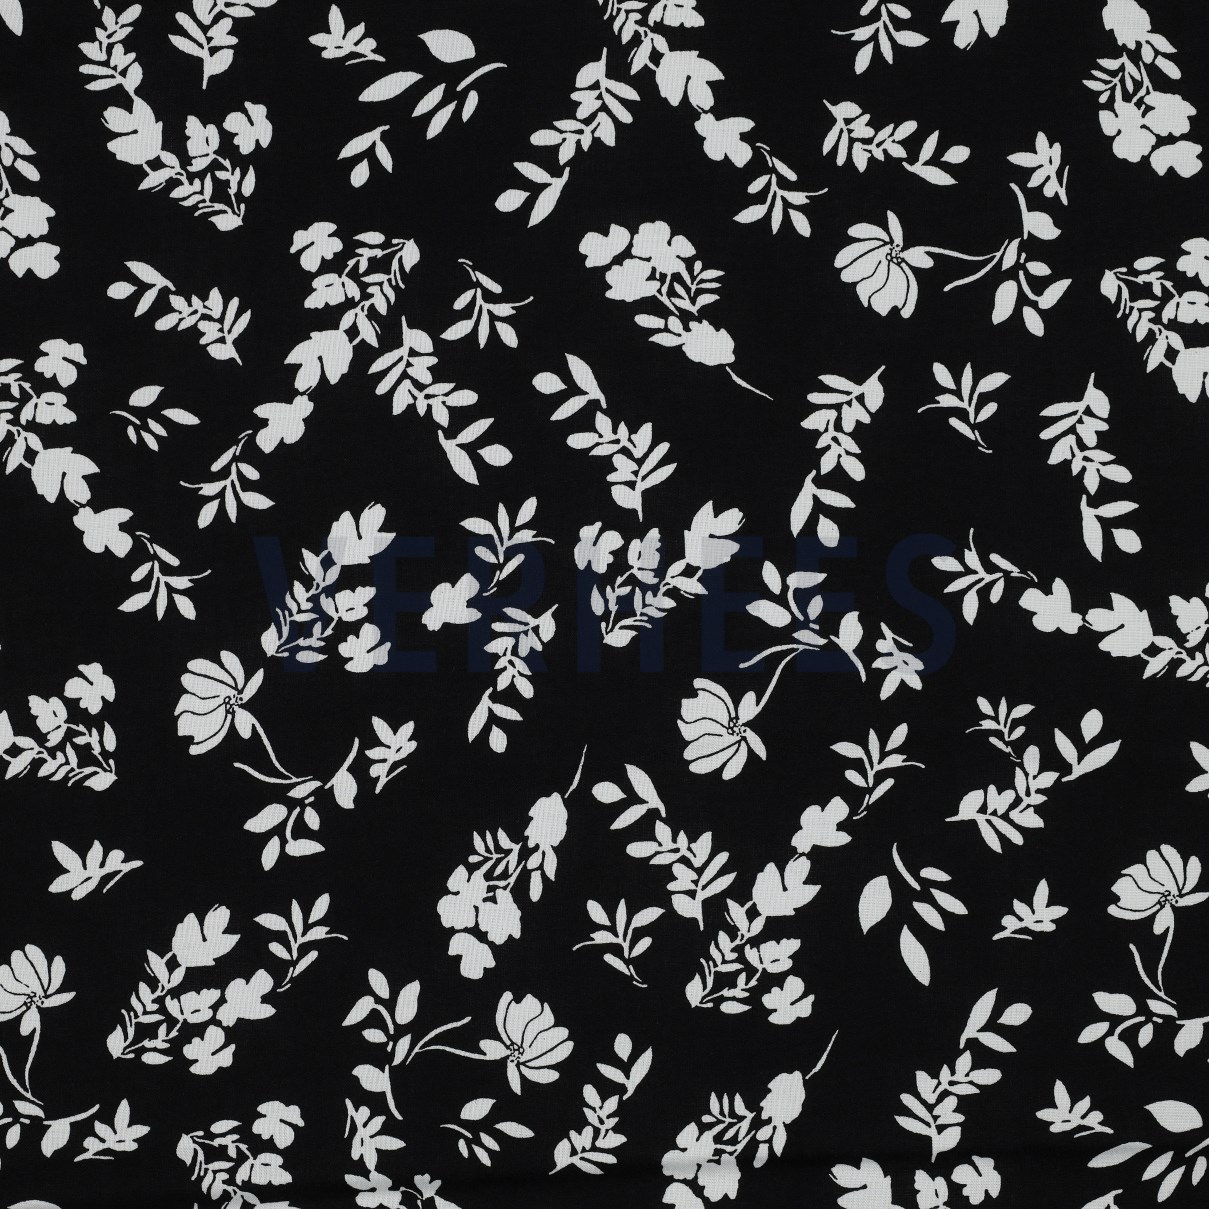 PRINTED VISCOSE FLOWERS BLACK (high resolution)